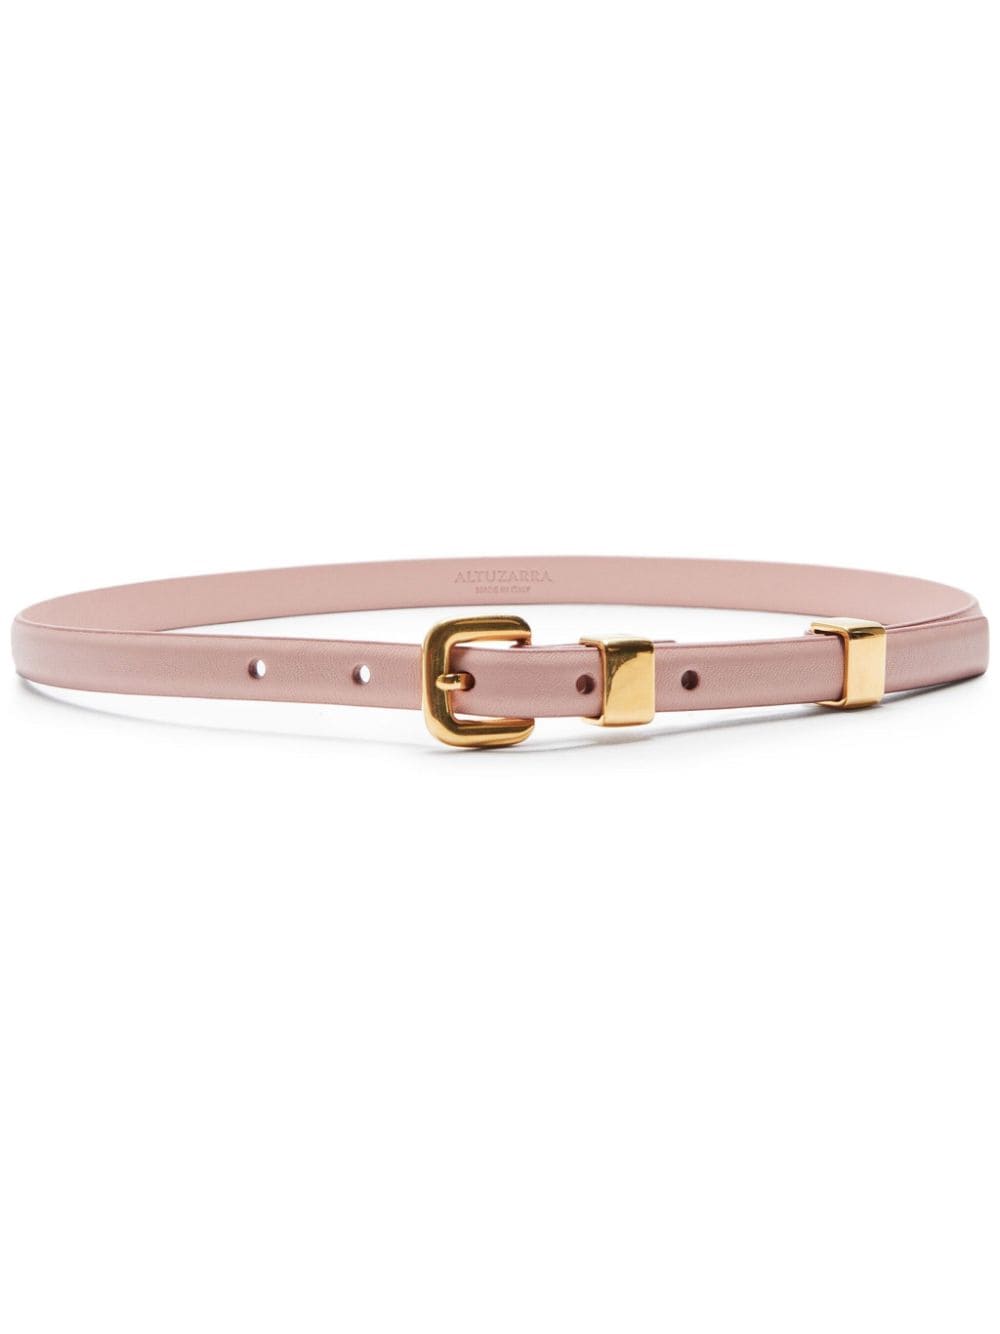 Altuzarra buckled leather belt - Pink von Altuzarra